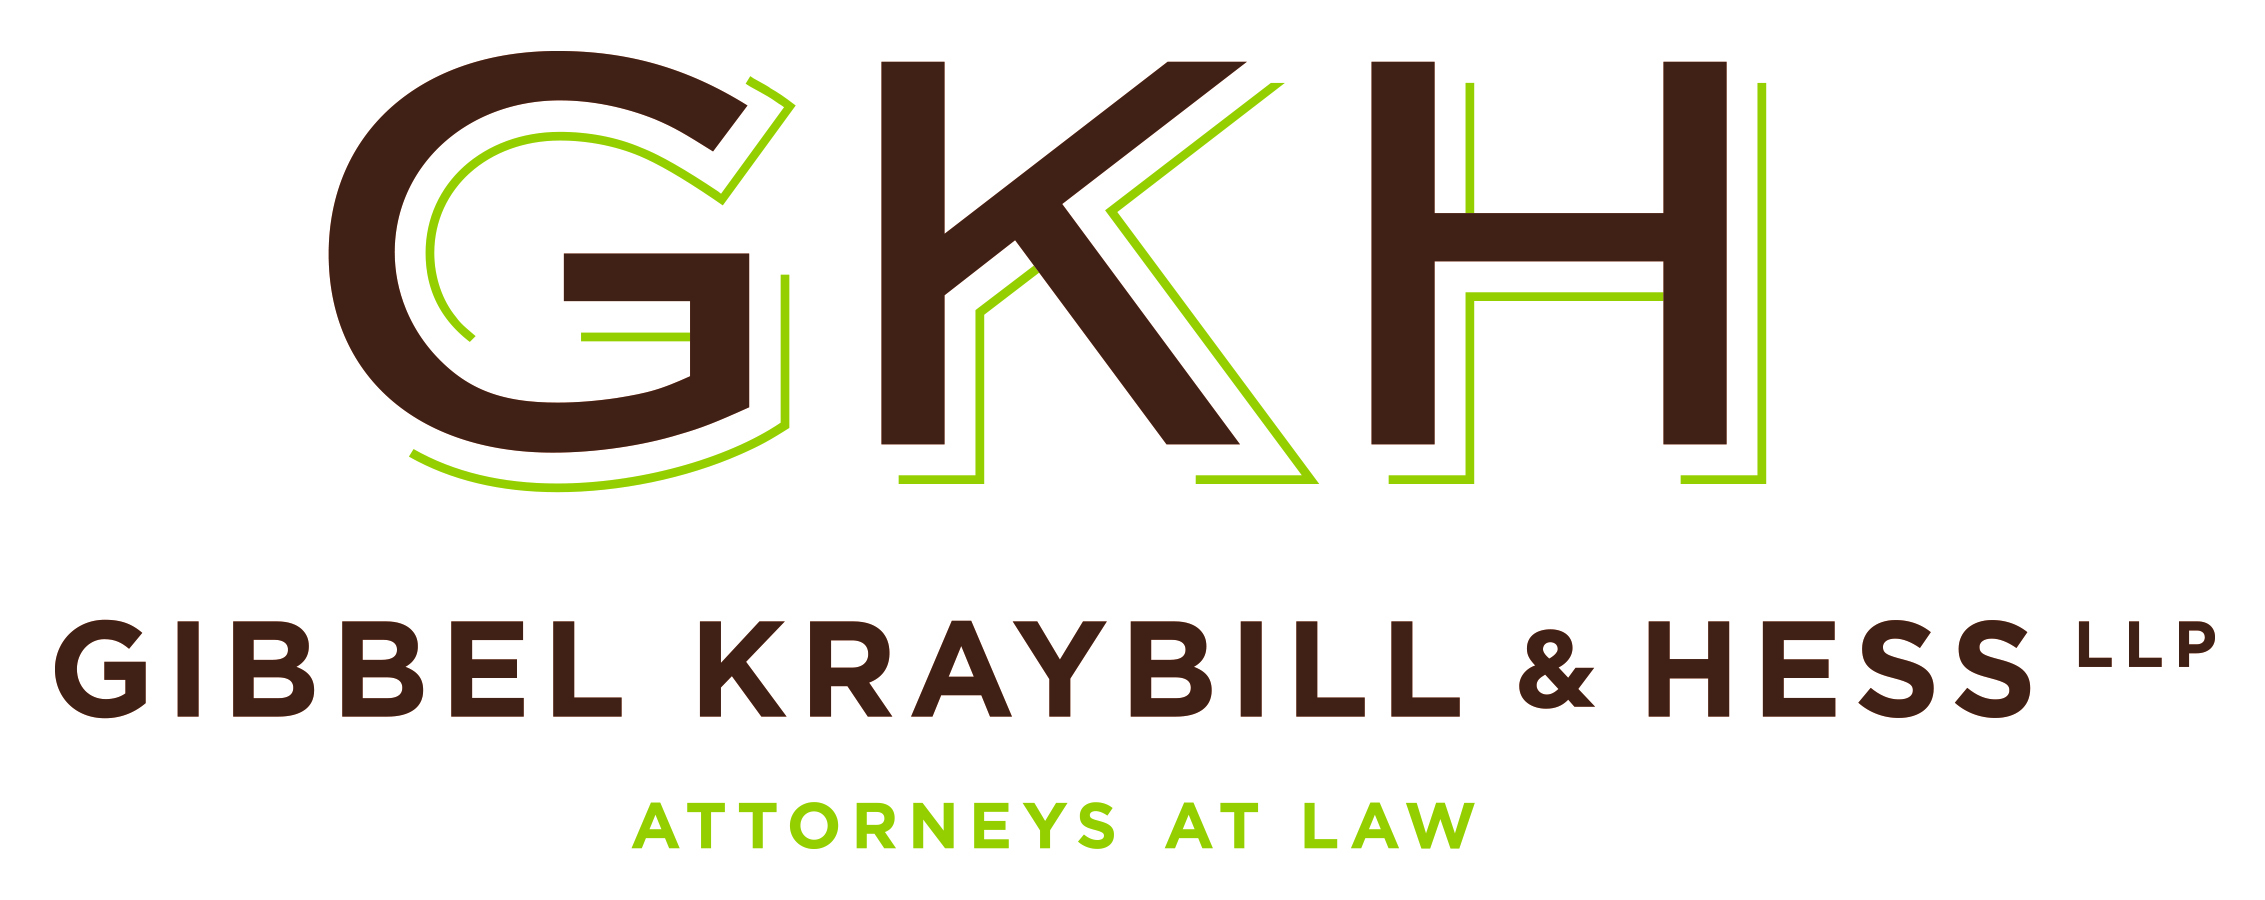 GKH-logo-stacked.jpg